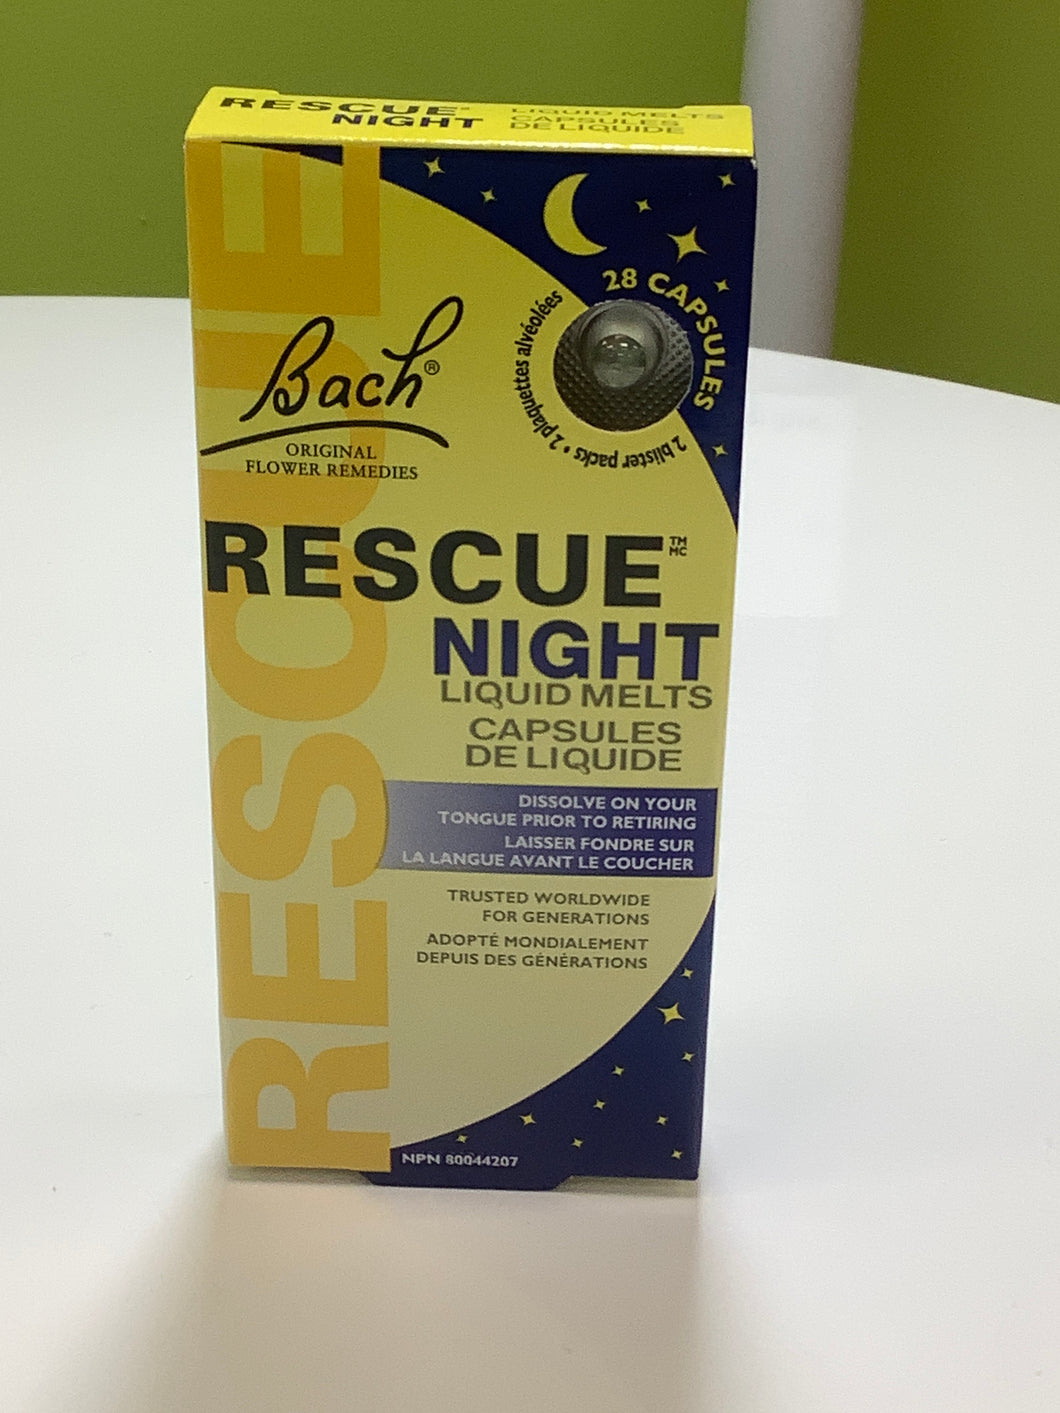 Bach Flower Remedies Rescue Night Liquid Melts